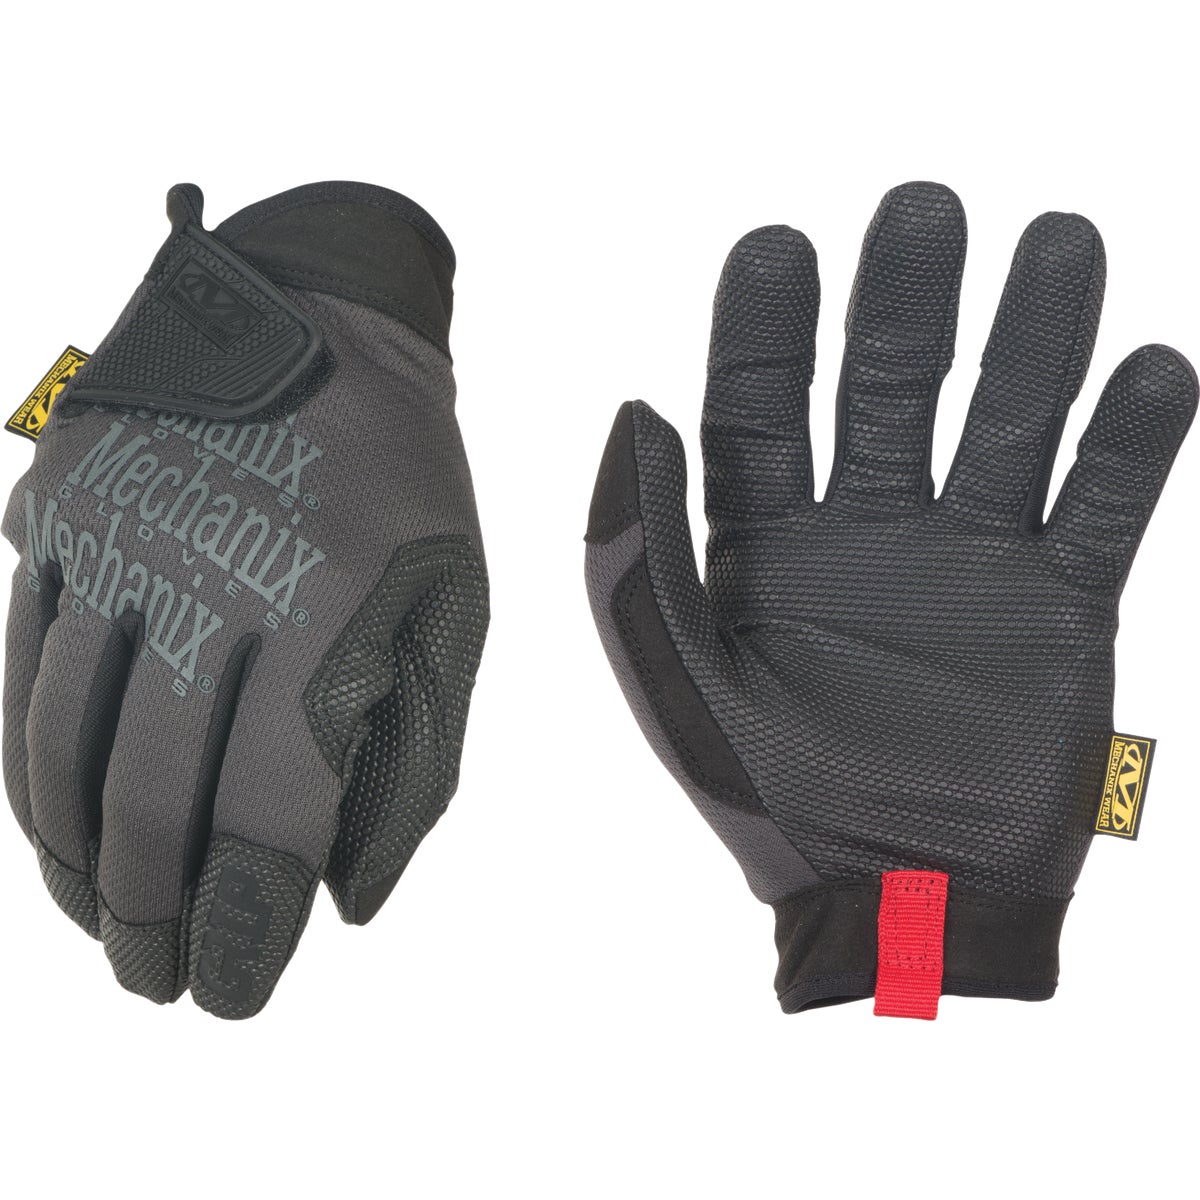 MSG-05-010 Mechanix Wear Specialty Grip Mens Work Glove